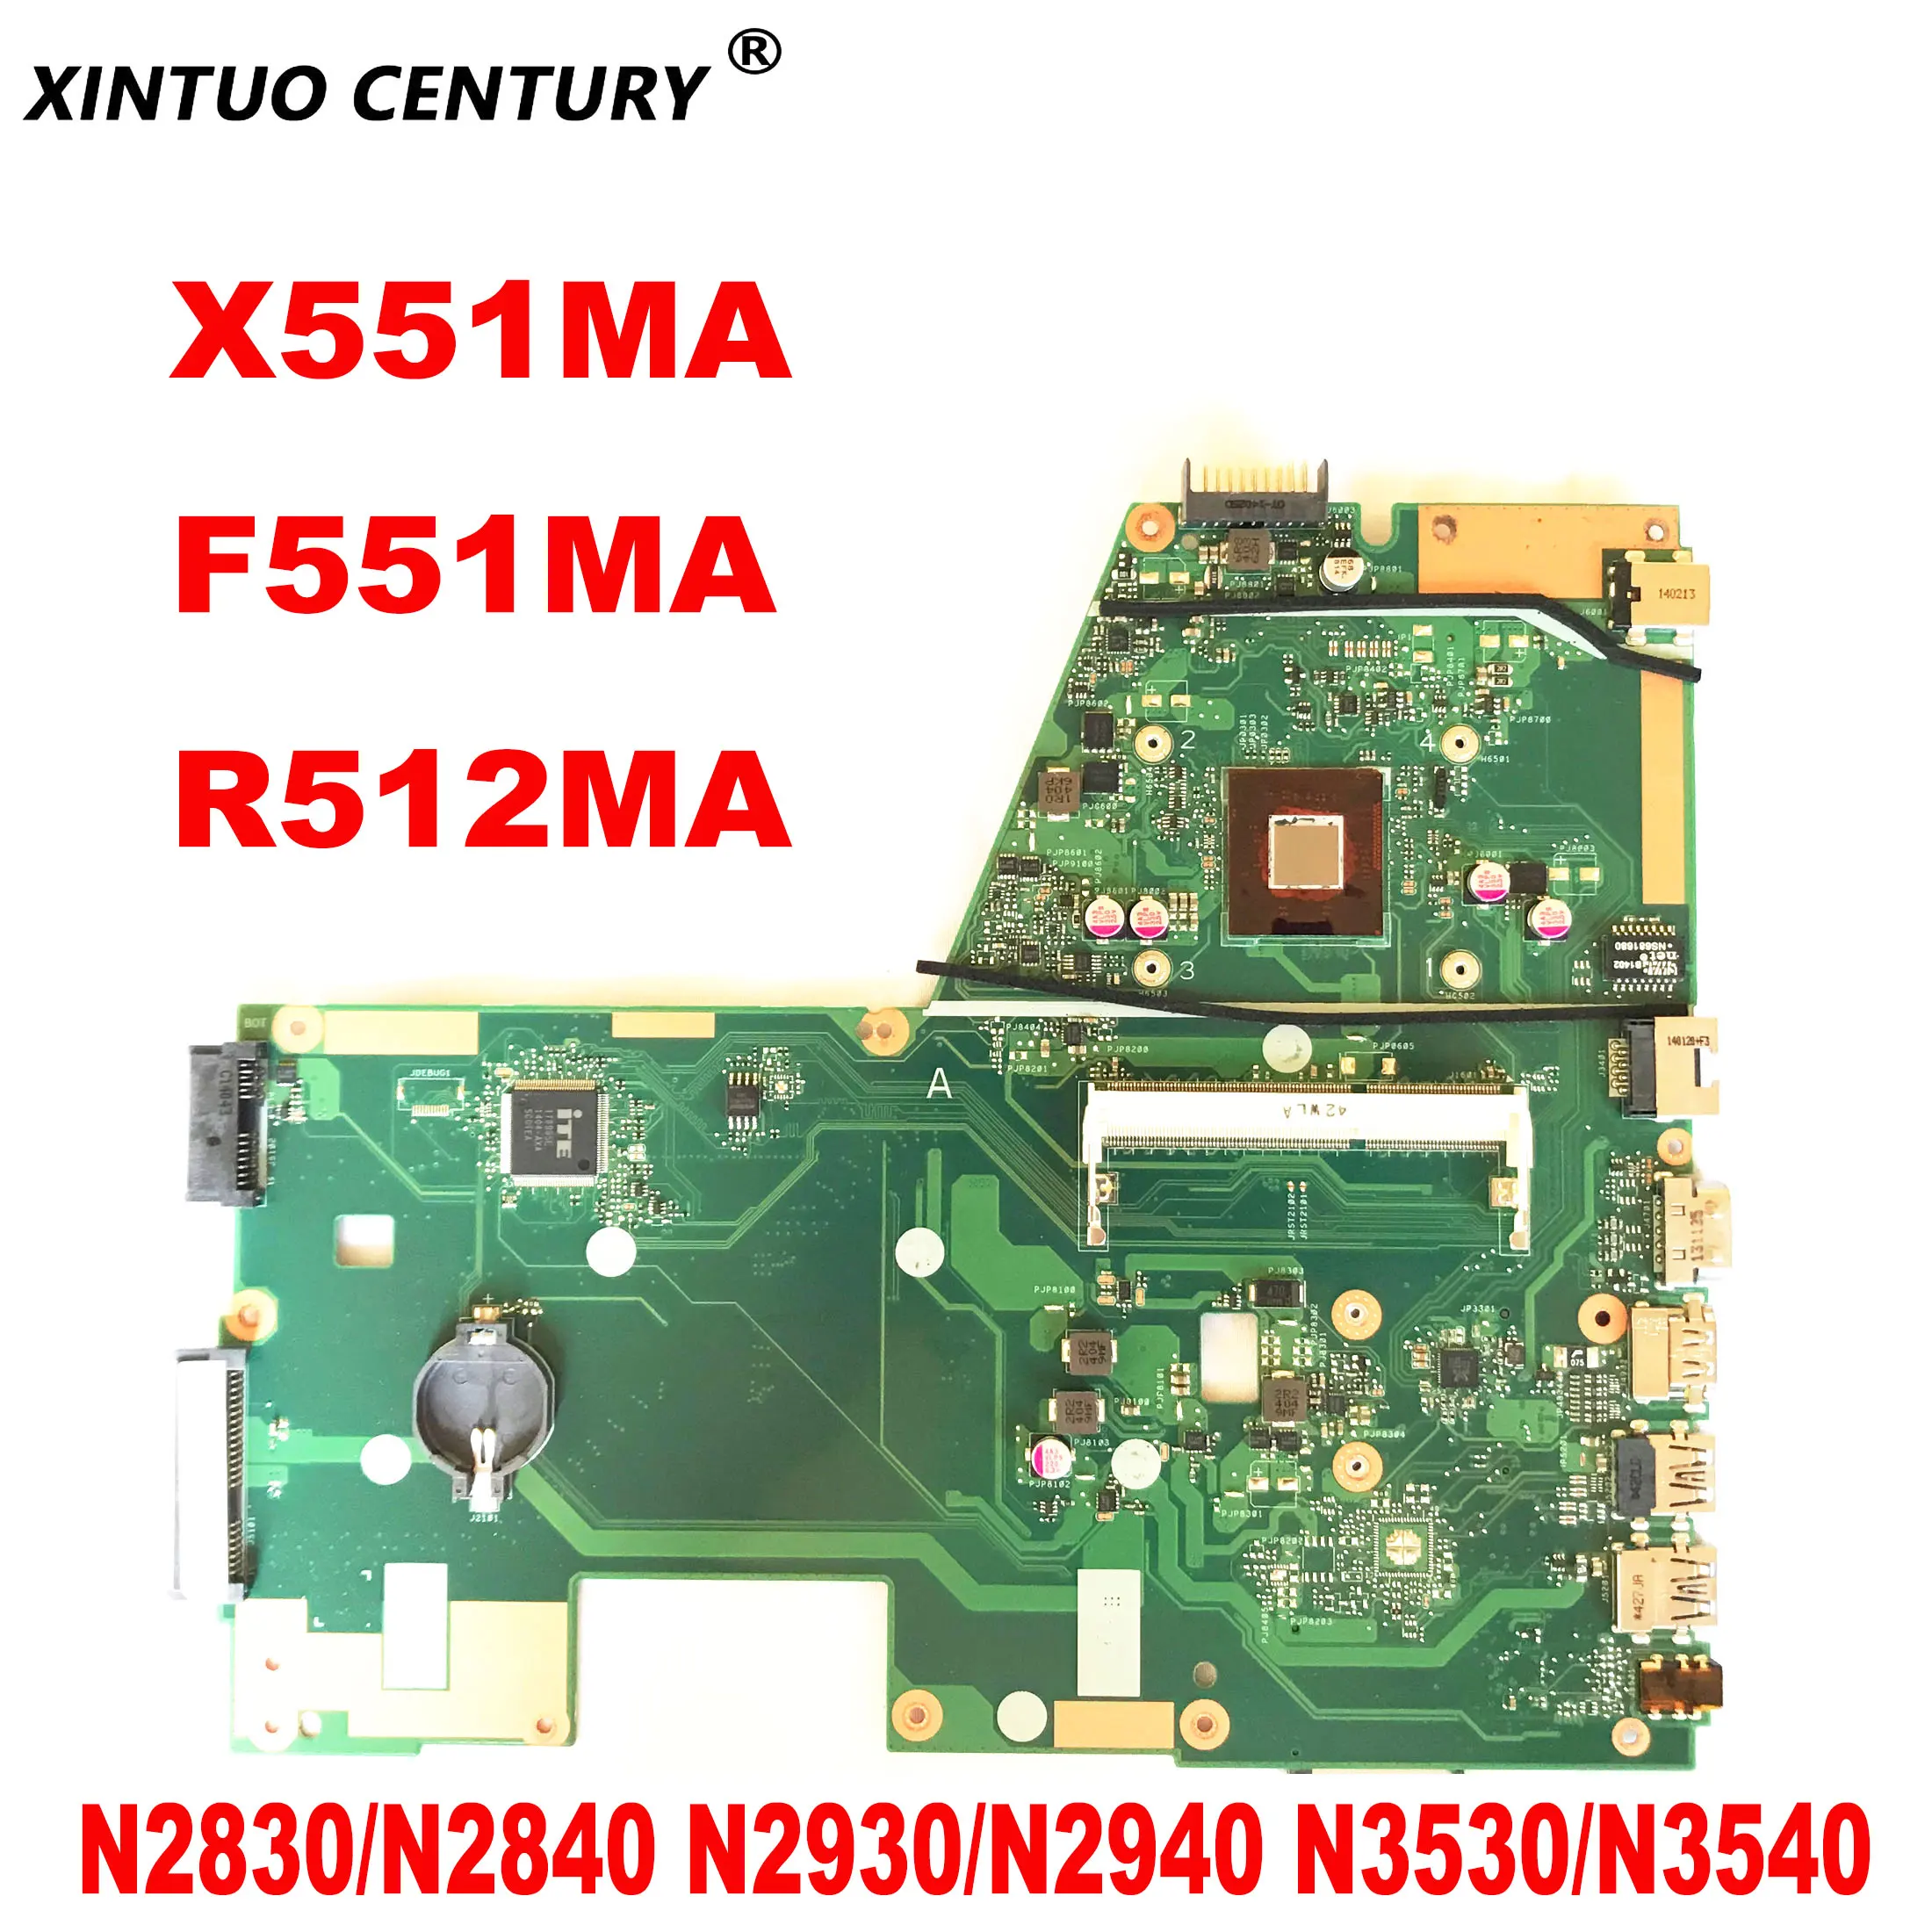 

X551MA Motherboard for Asus F551MA R512MA Laptop Motherboard with N2830 N2840 N2930 N2940 N3530 N3540 CPU DDR3 Tested